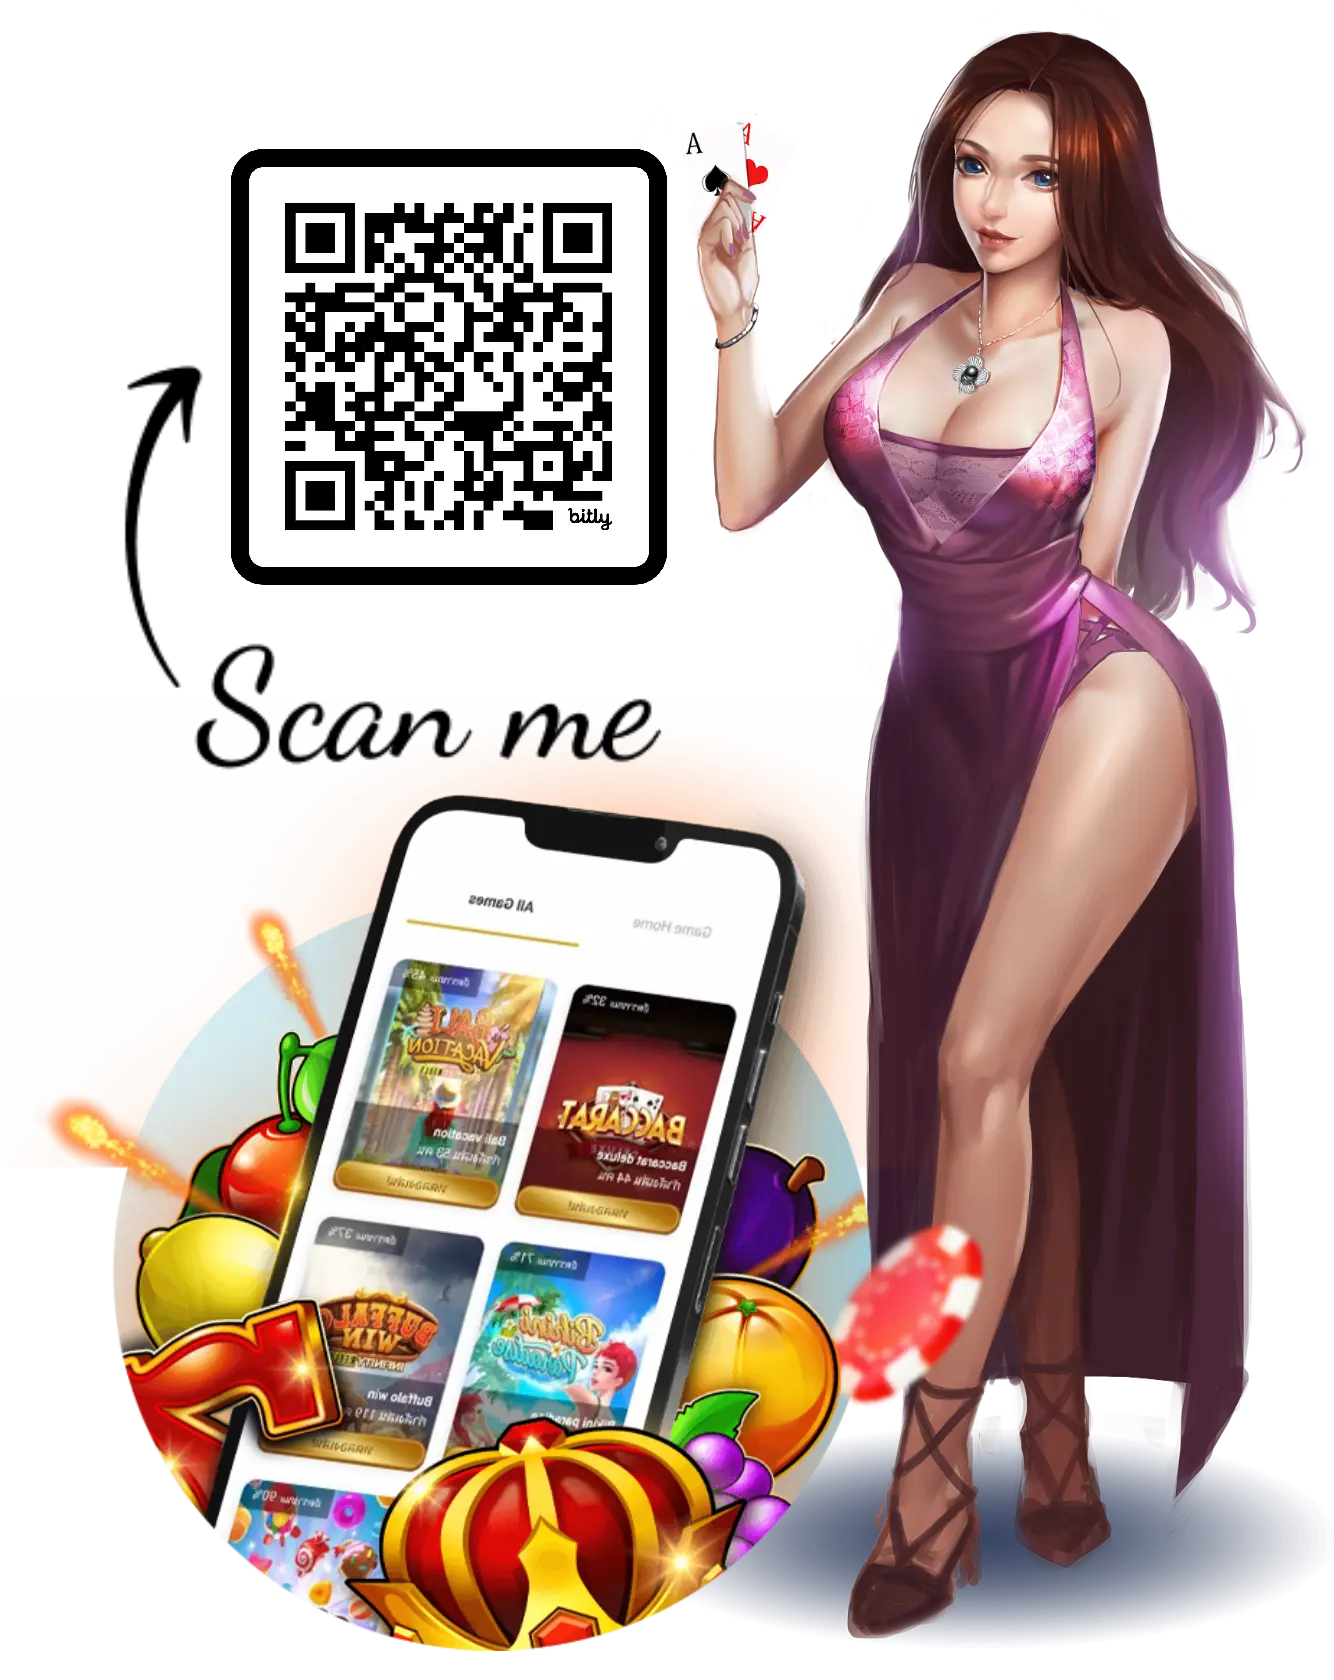 soloph casino download app 189